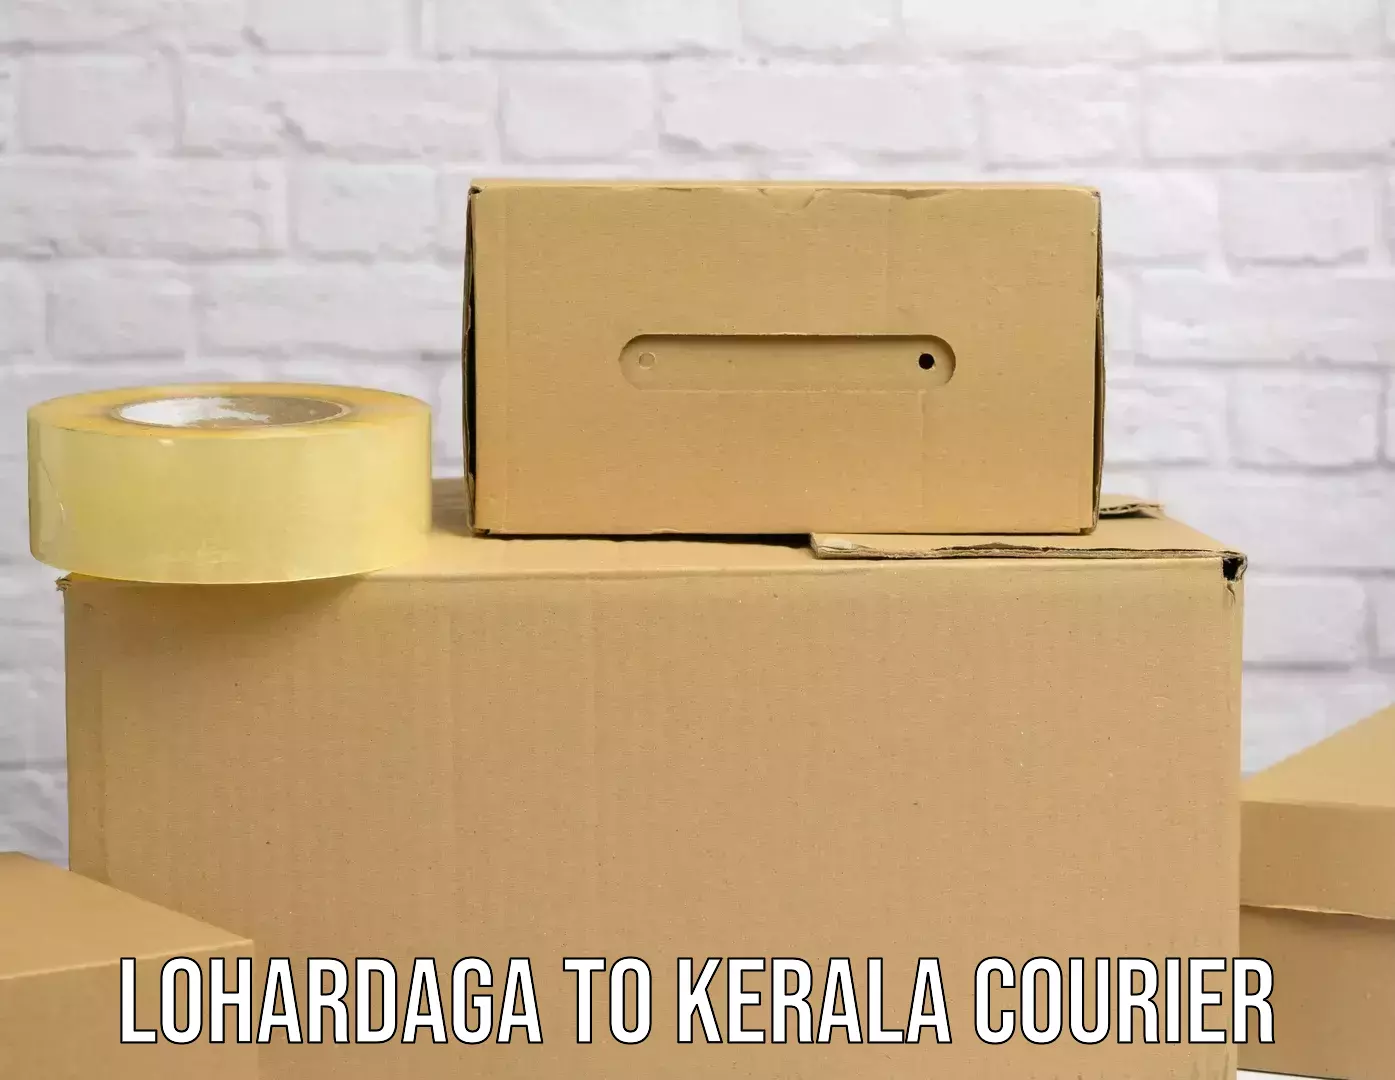 Enhanced tracking features Lohardaga to Kerala